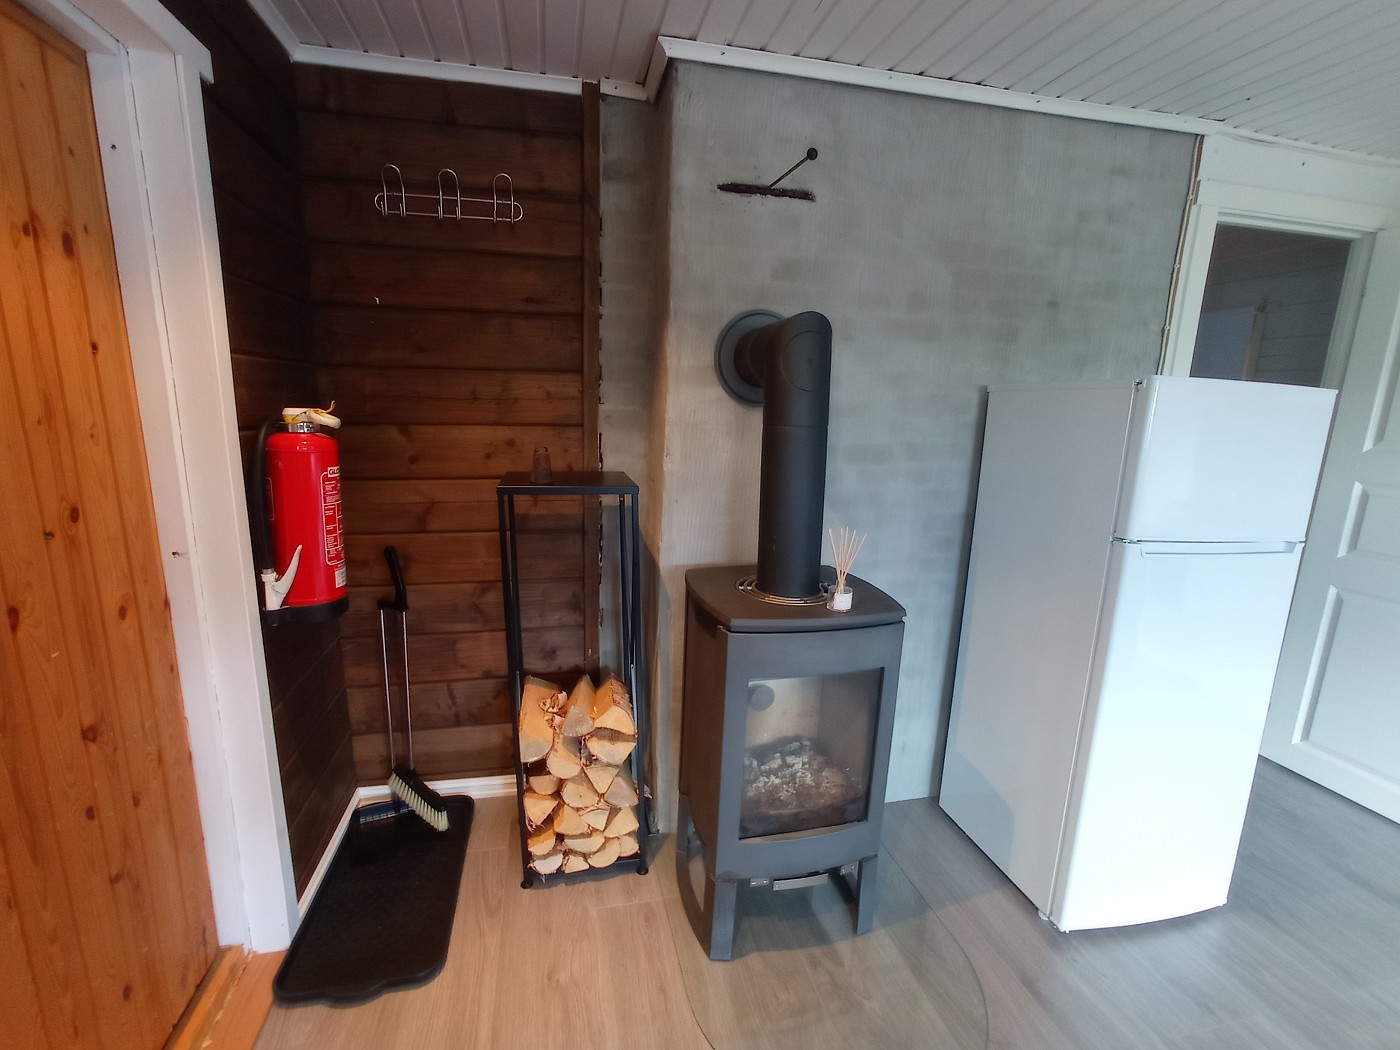 wood stove hearth fireplace Kilpisjärvi northern Finland Lapland Sami area fridge